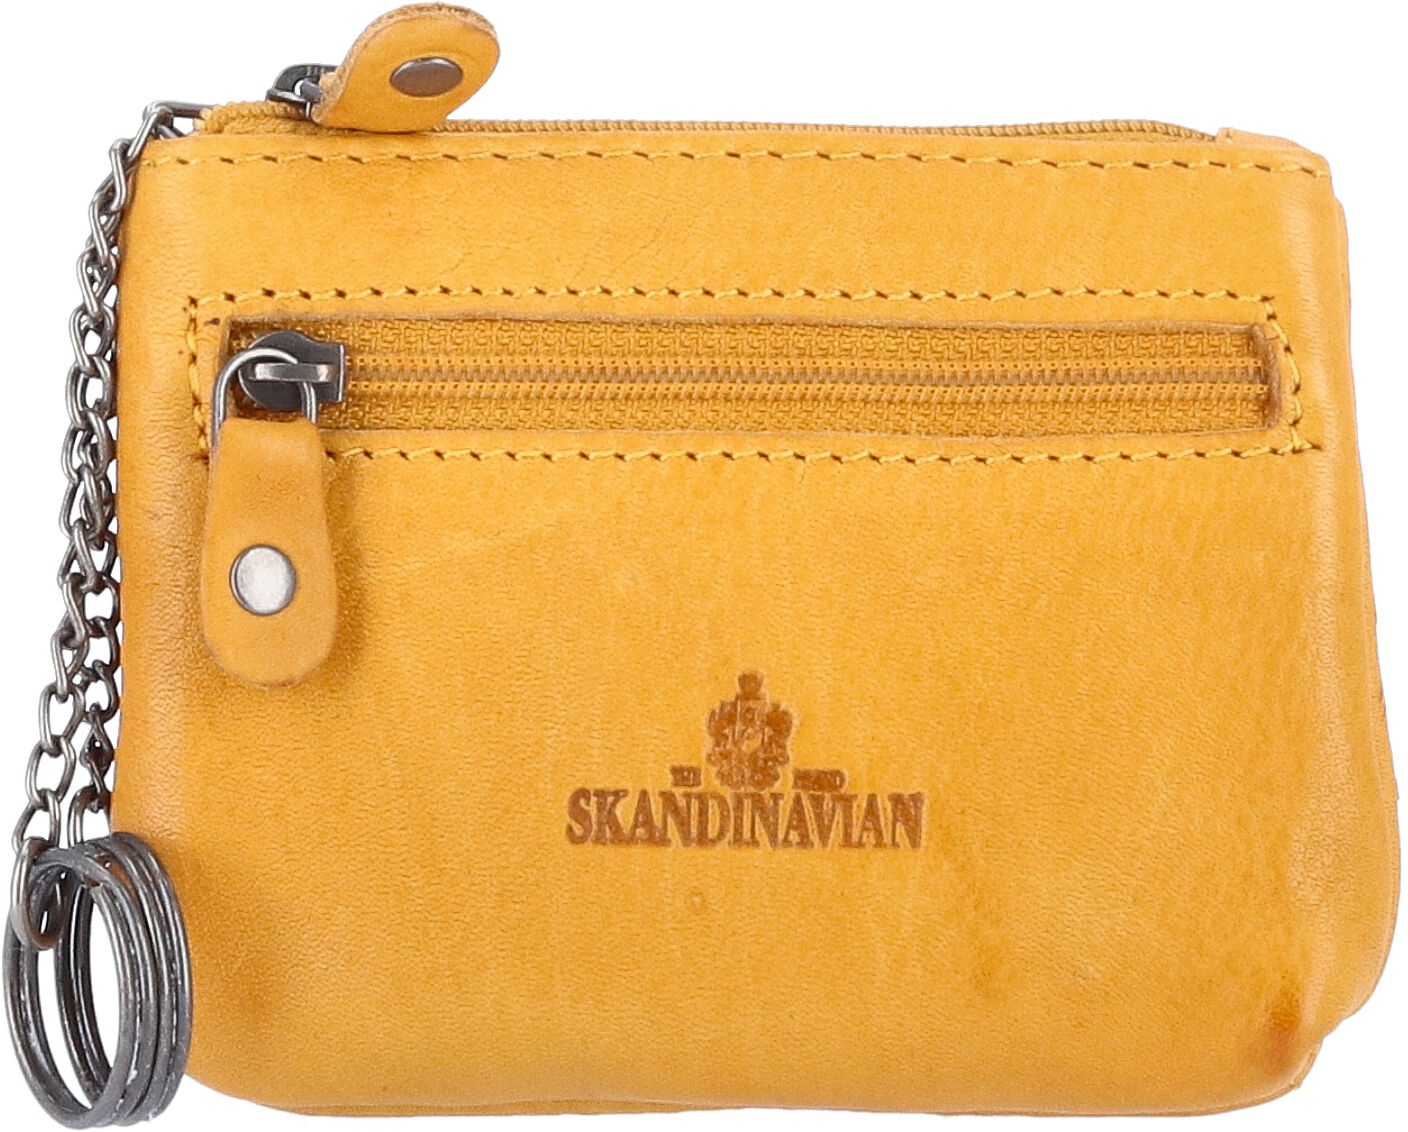 The Skandinavian Brand Key Holder Washed Leather gelb